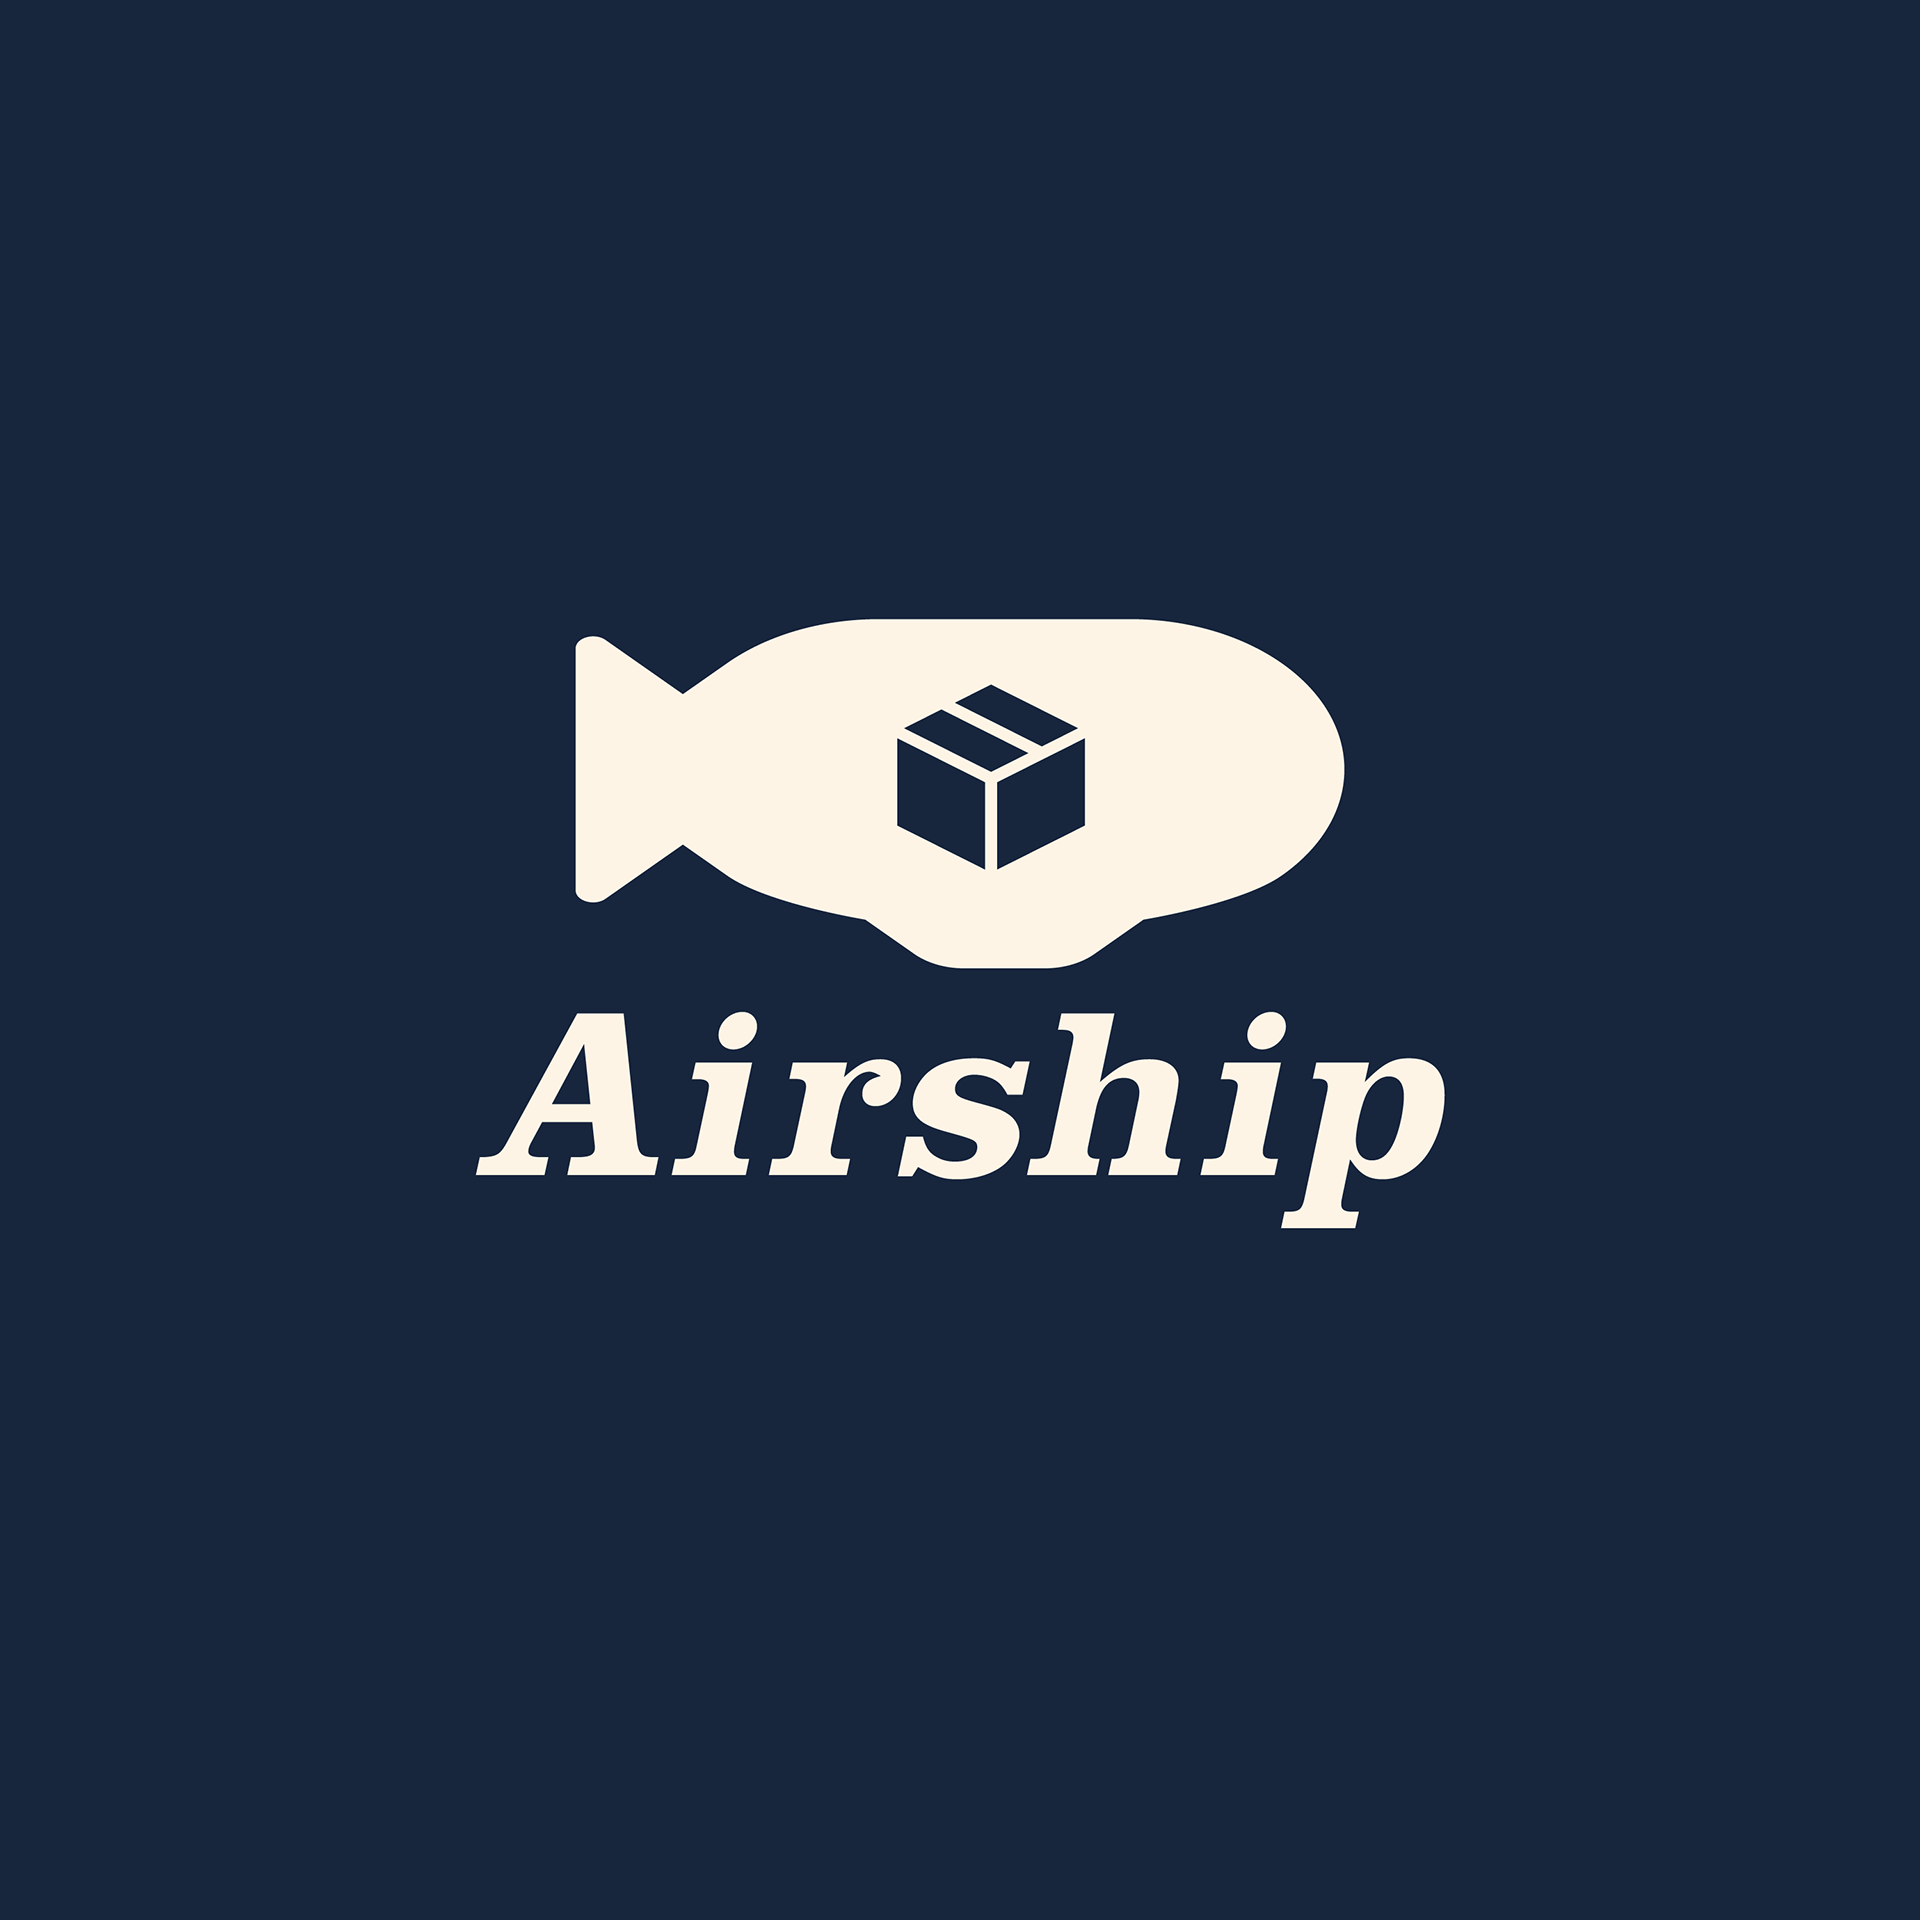 Postal Service Logo - Patrick Halpin Art & Design - Airship - Postal Service Logo